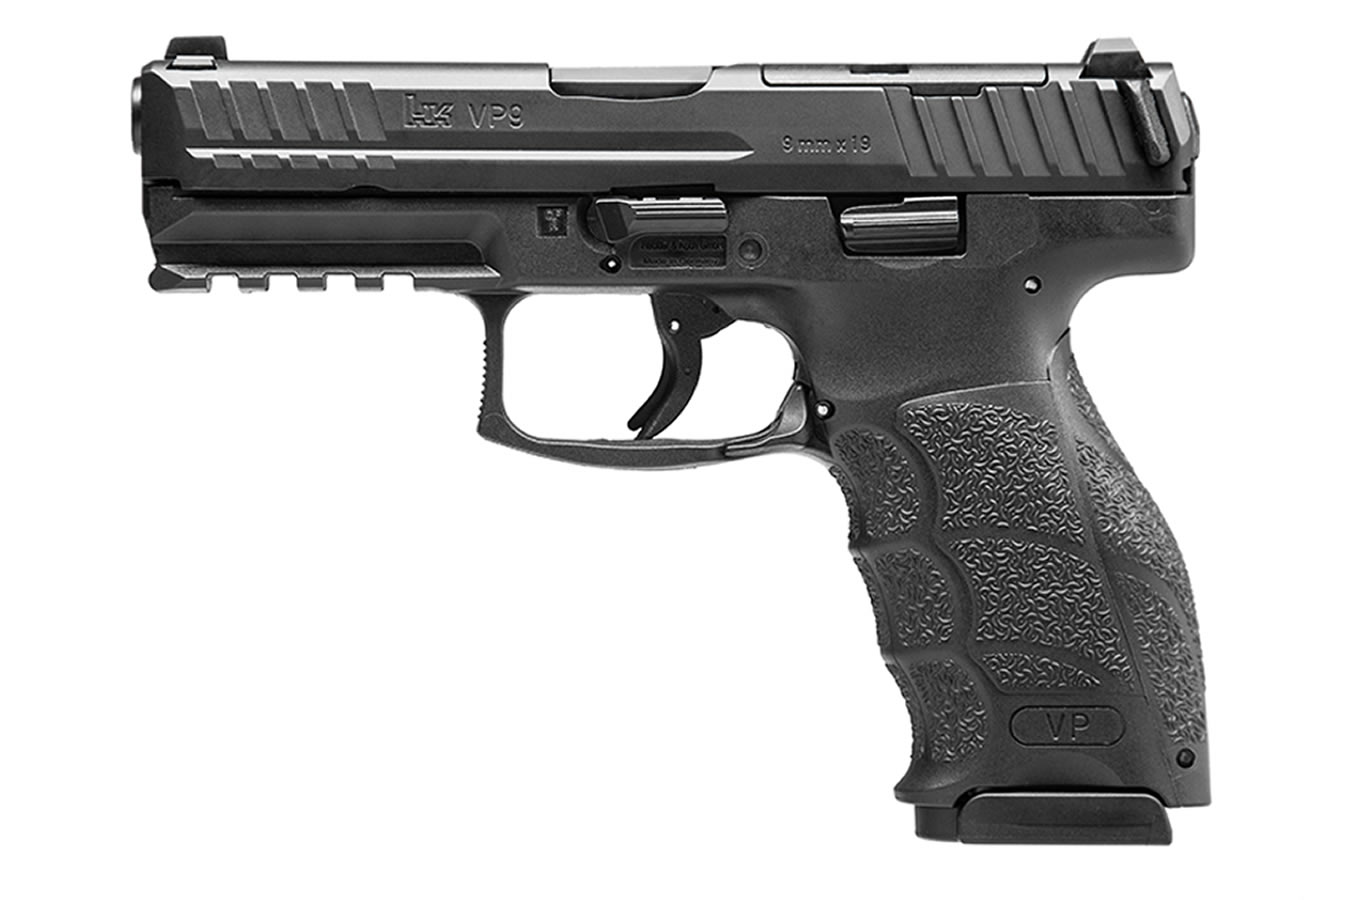 h-k-vp9-9mm-optics-ready-striker-fired-pistol-vance-outdoors